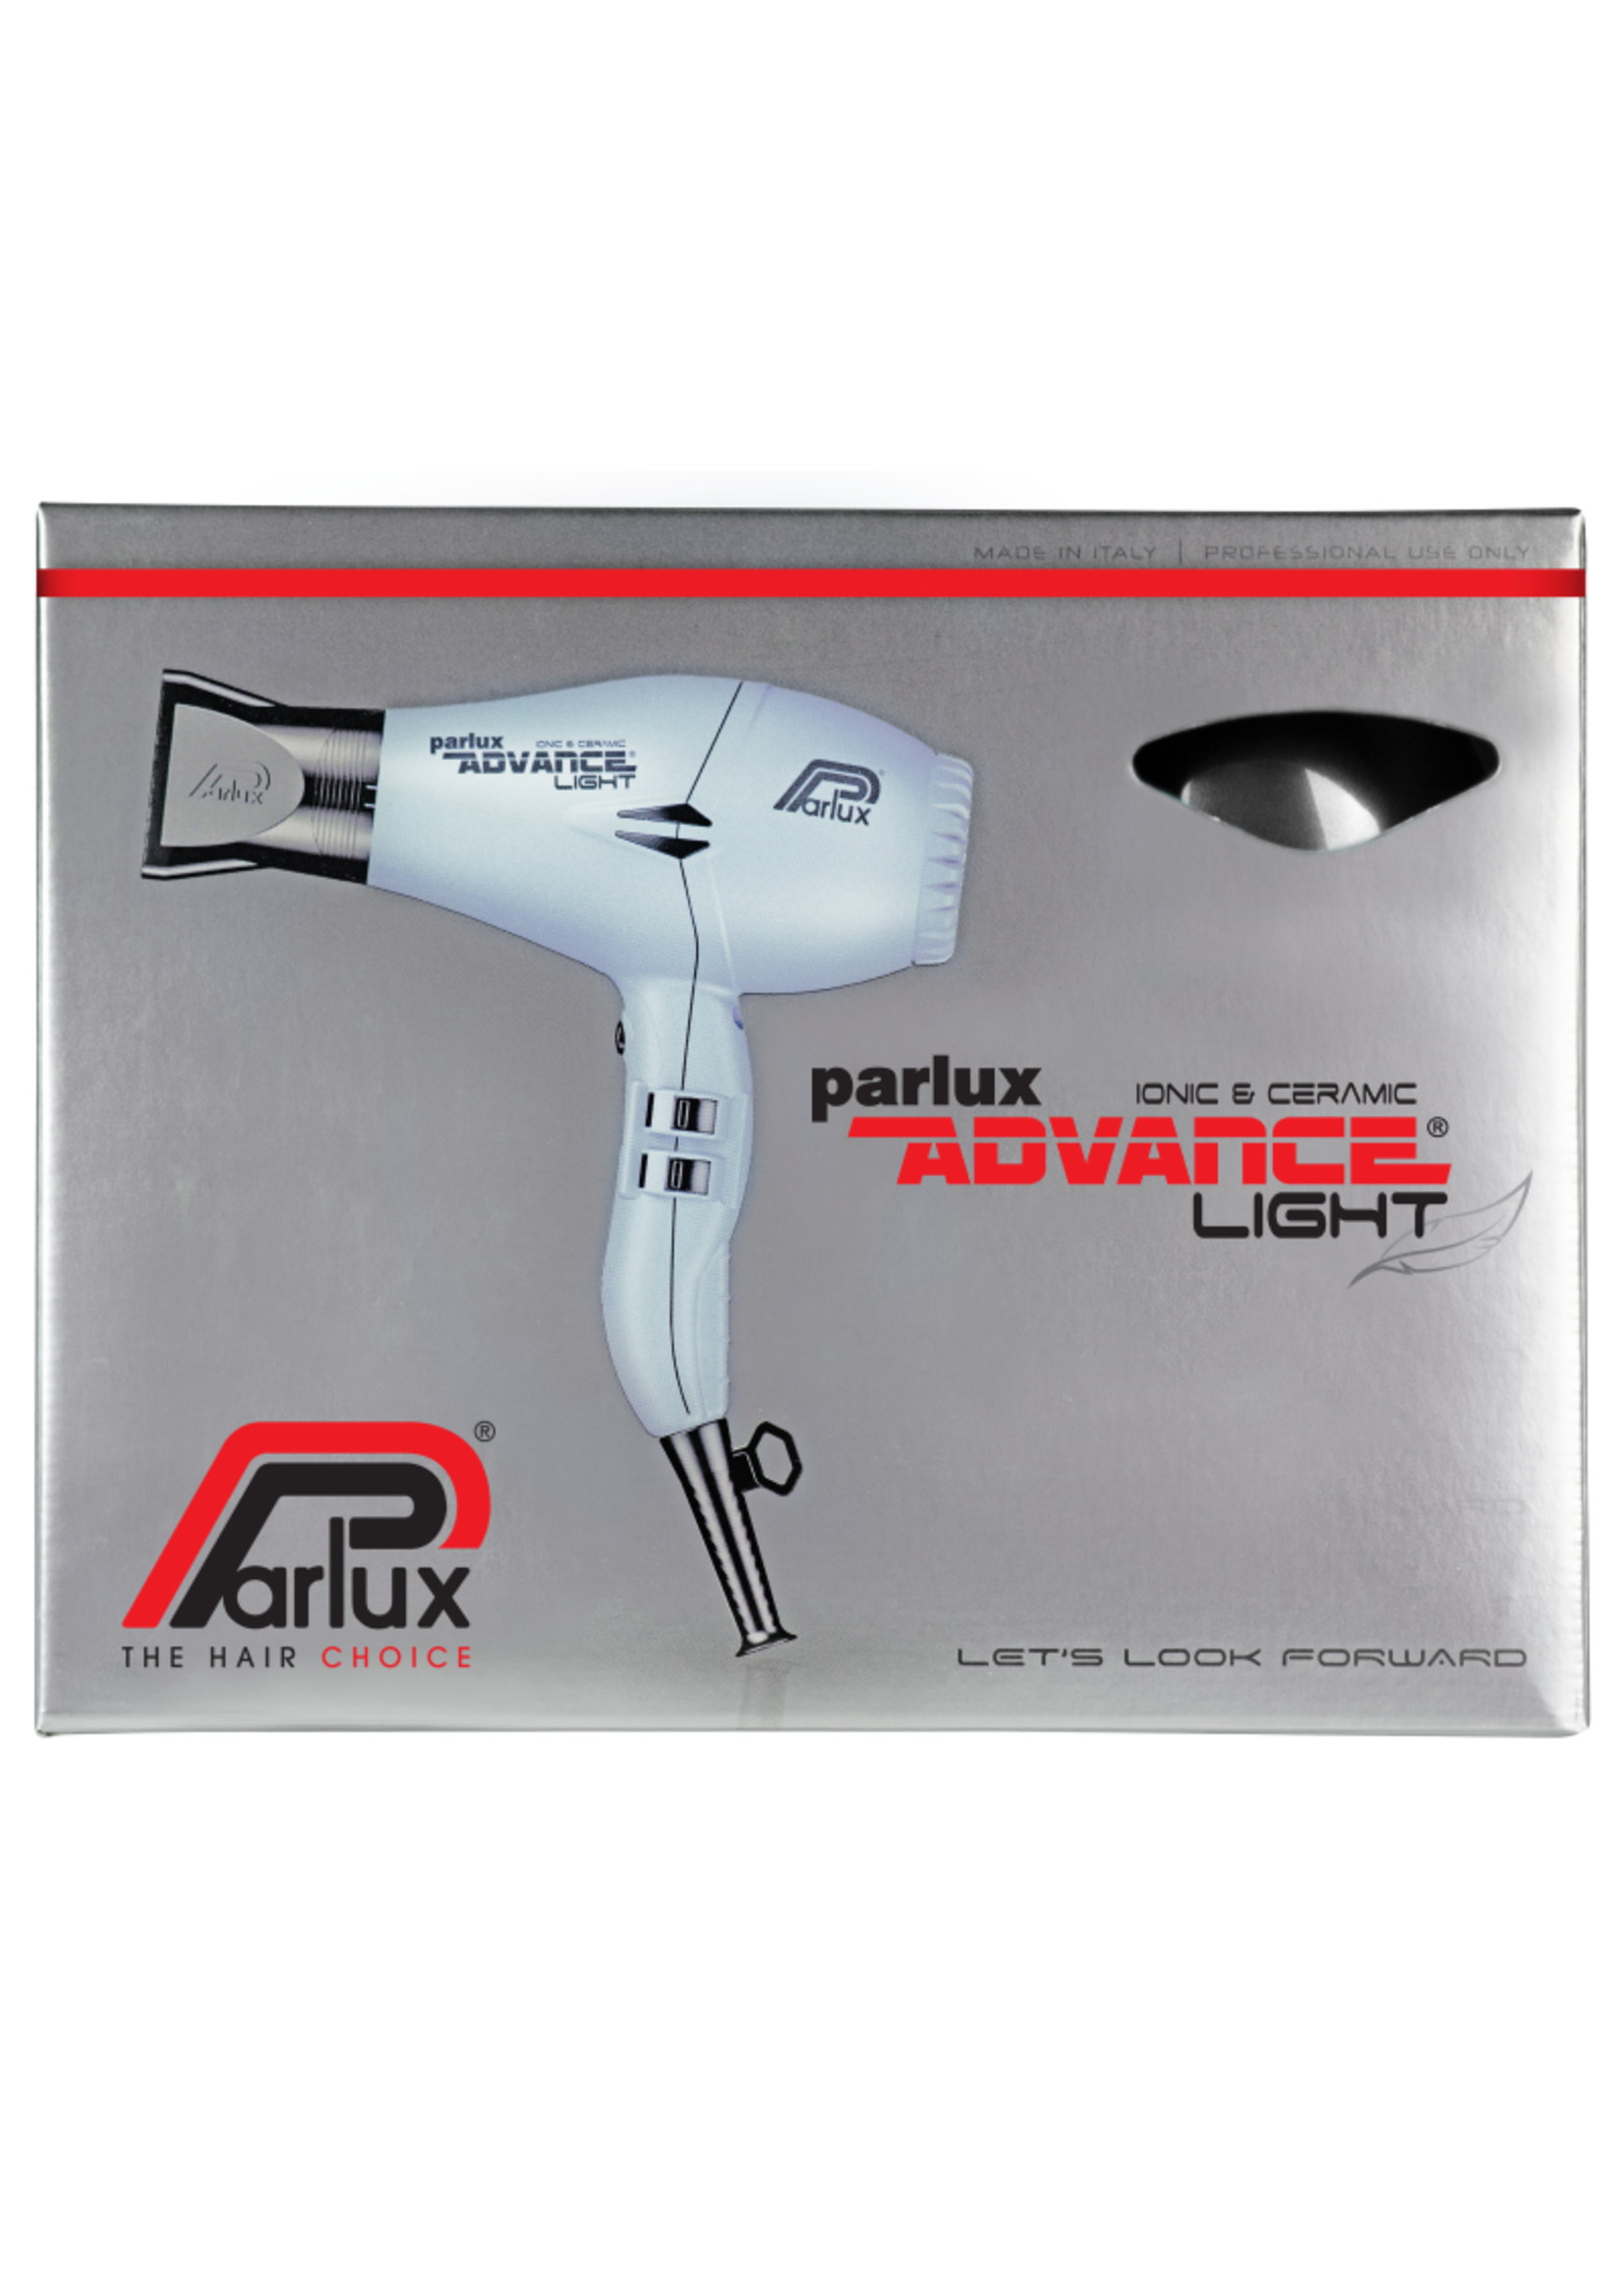 Parlux Parlux Advance Light Ceramic & Ionic Hair Dryer 2200W - Graphite